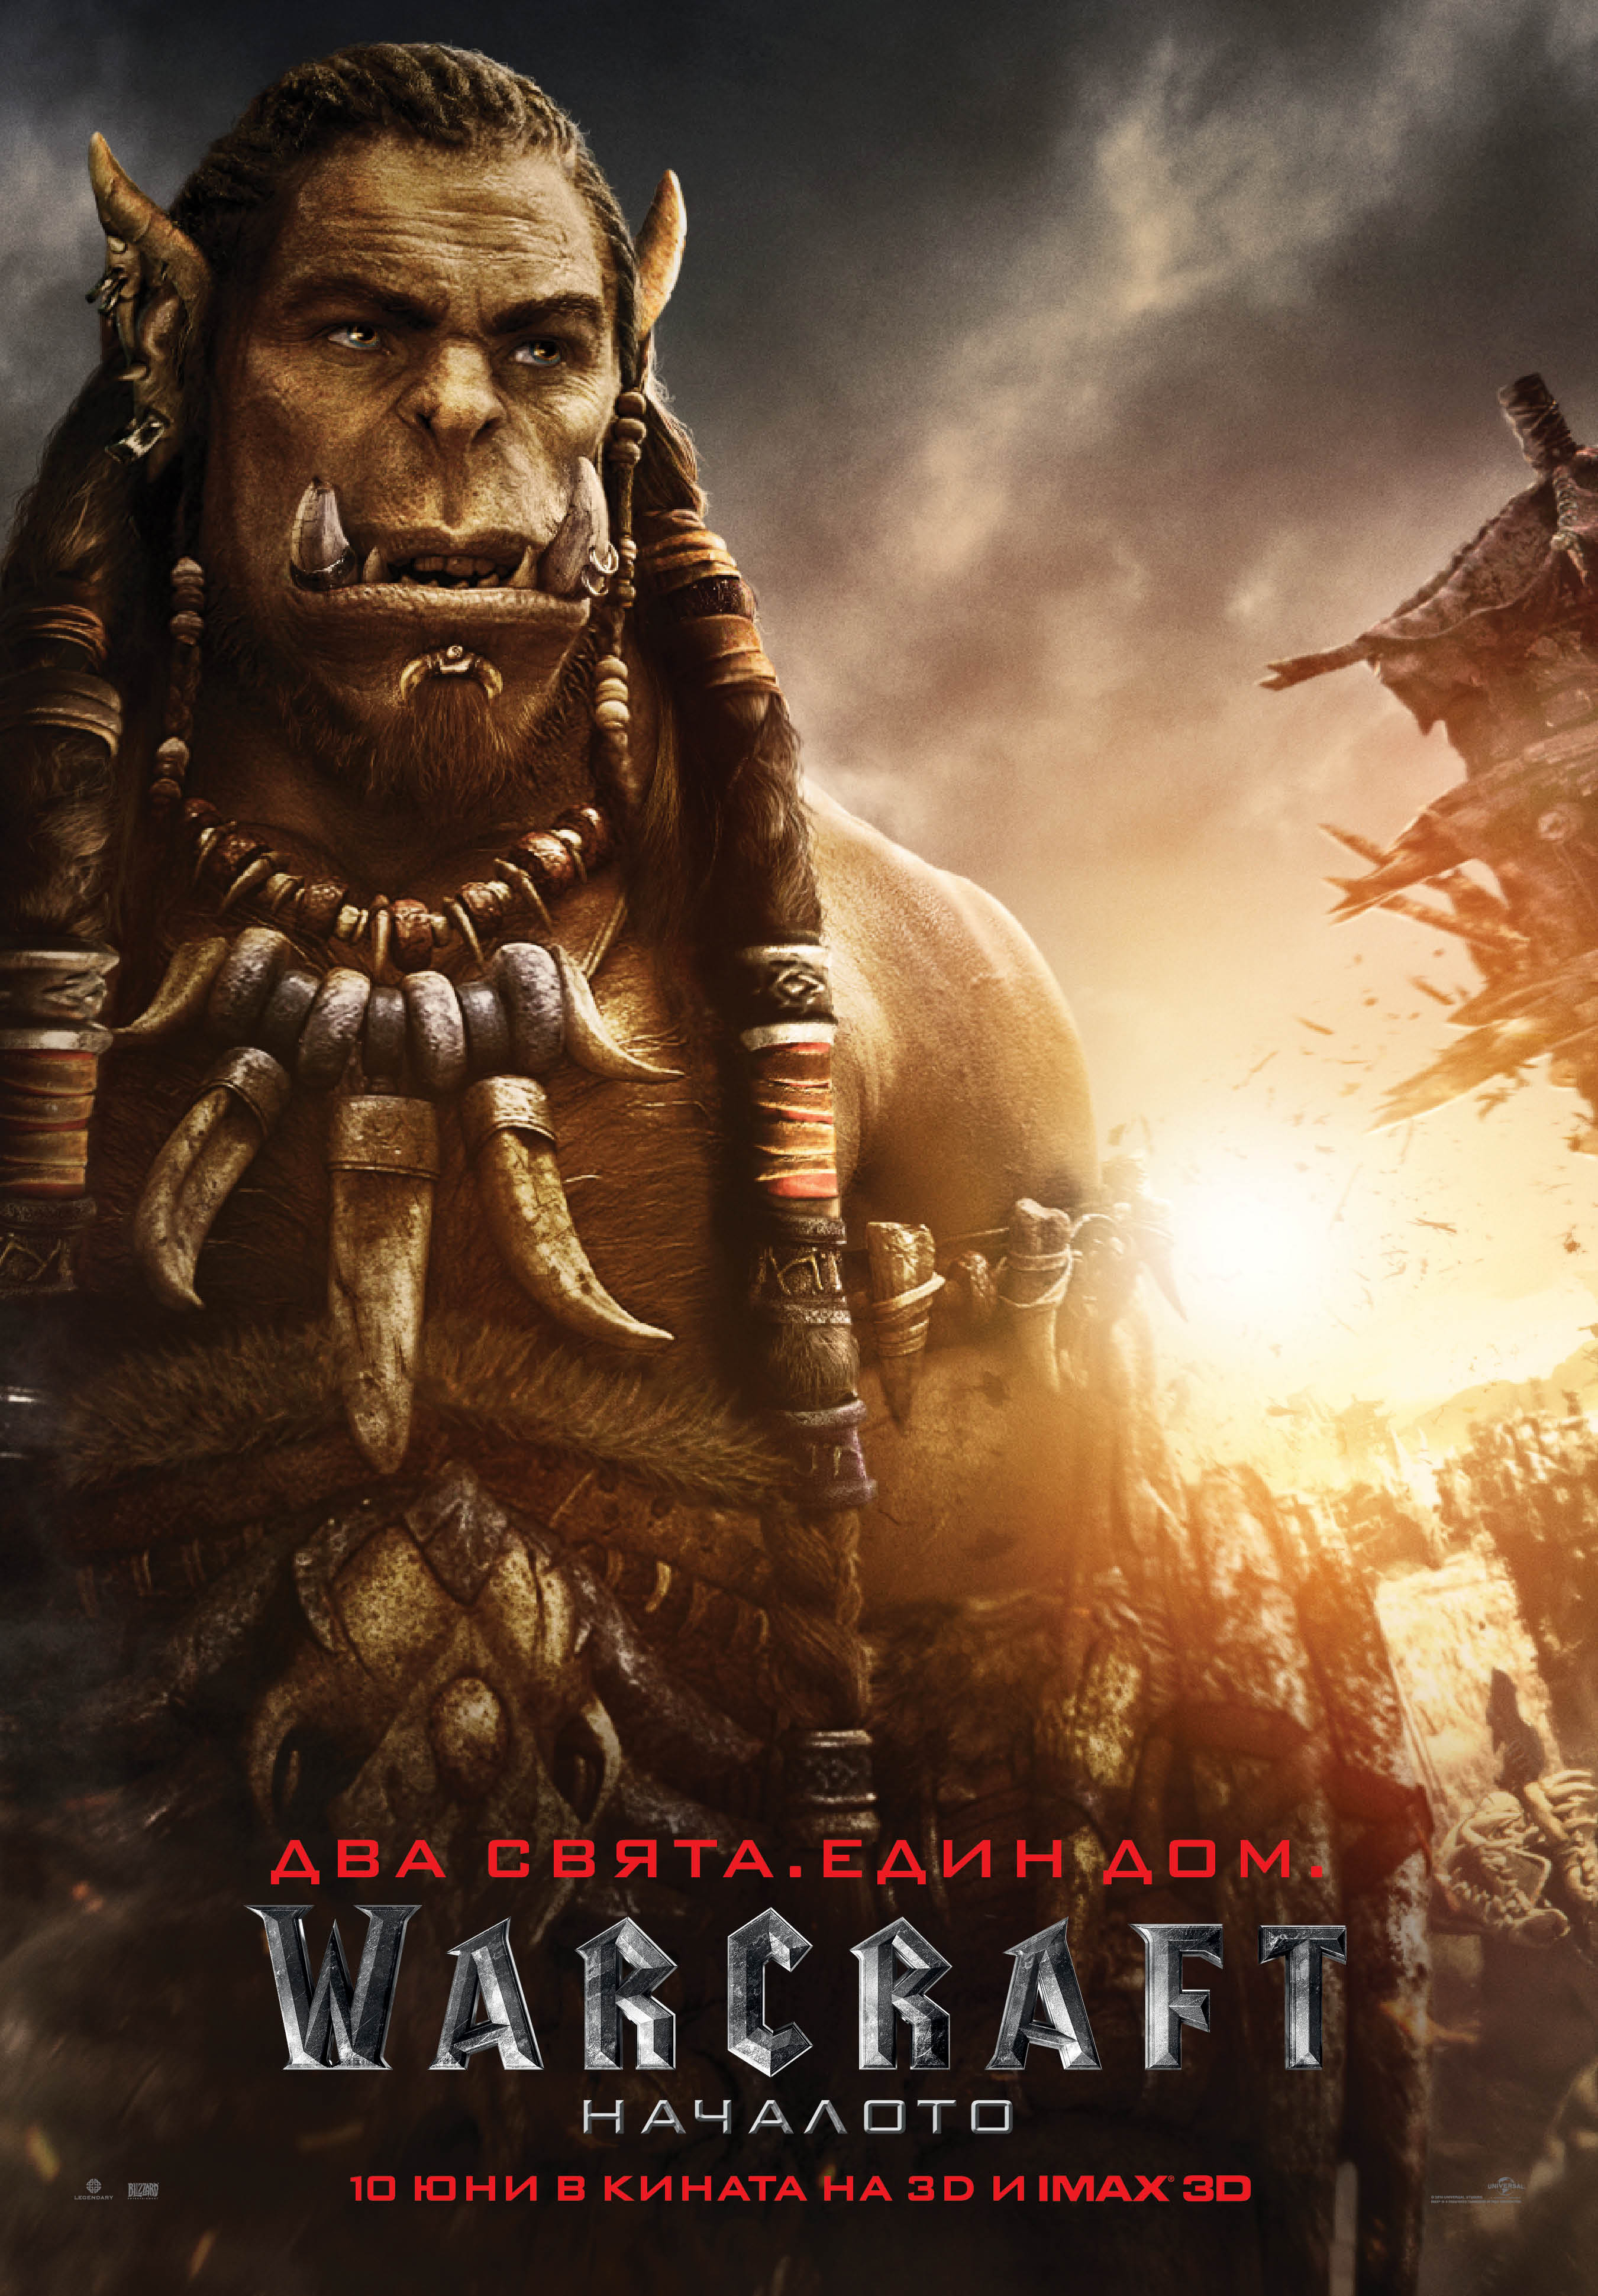 Character Online posters - Warcraft (Durotan) April 2016